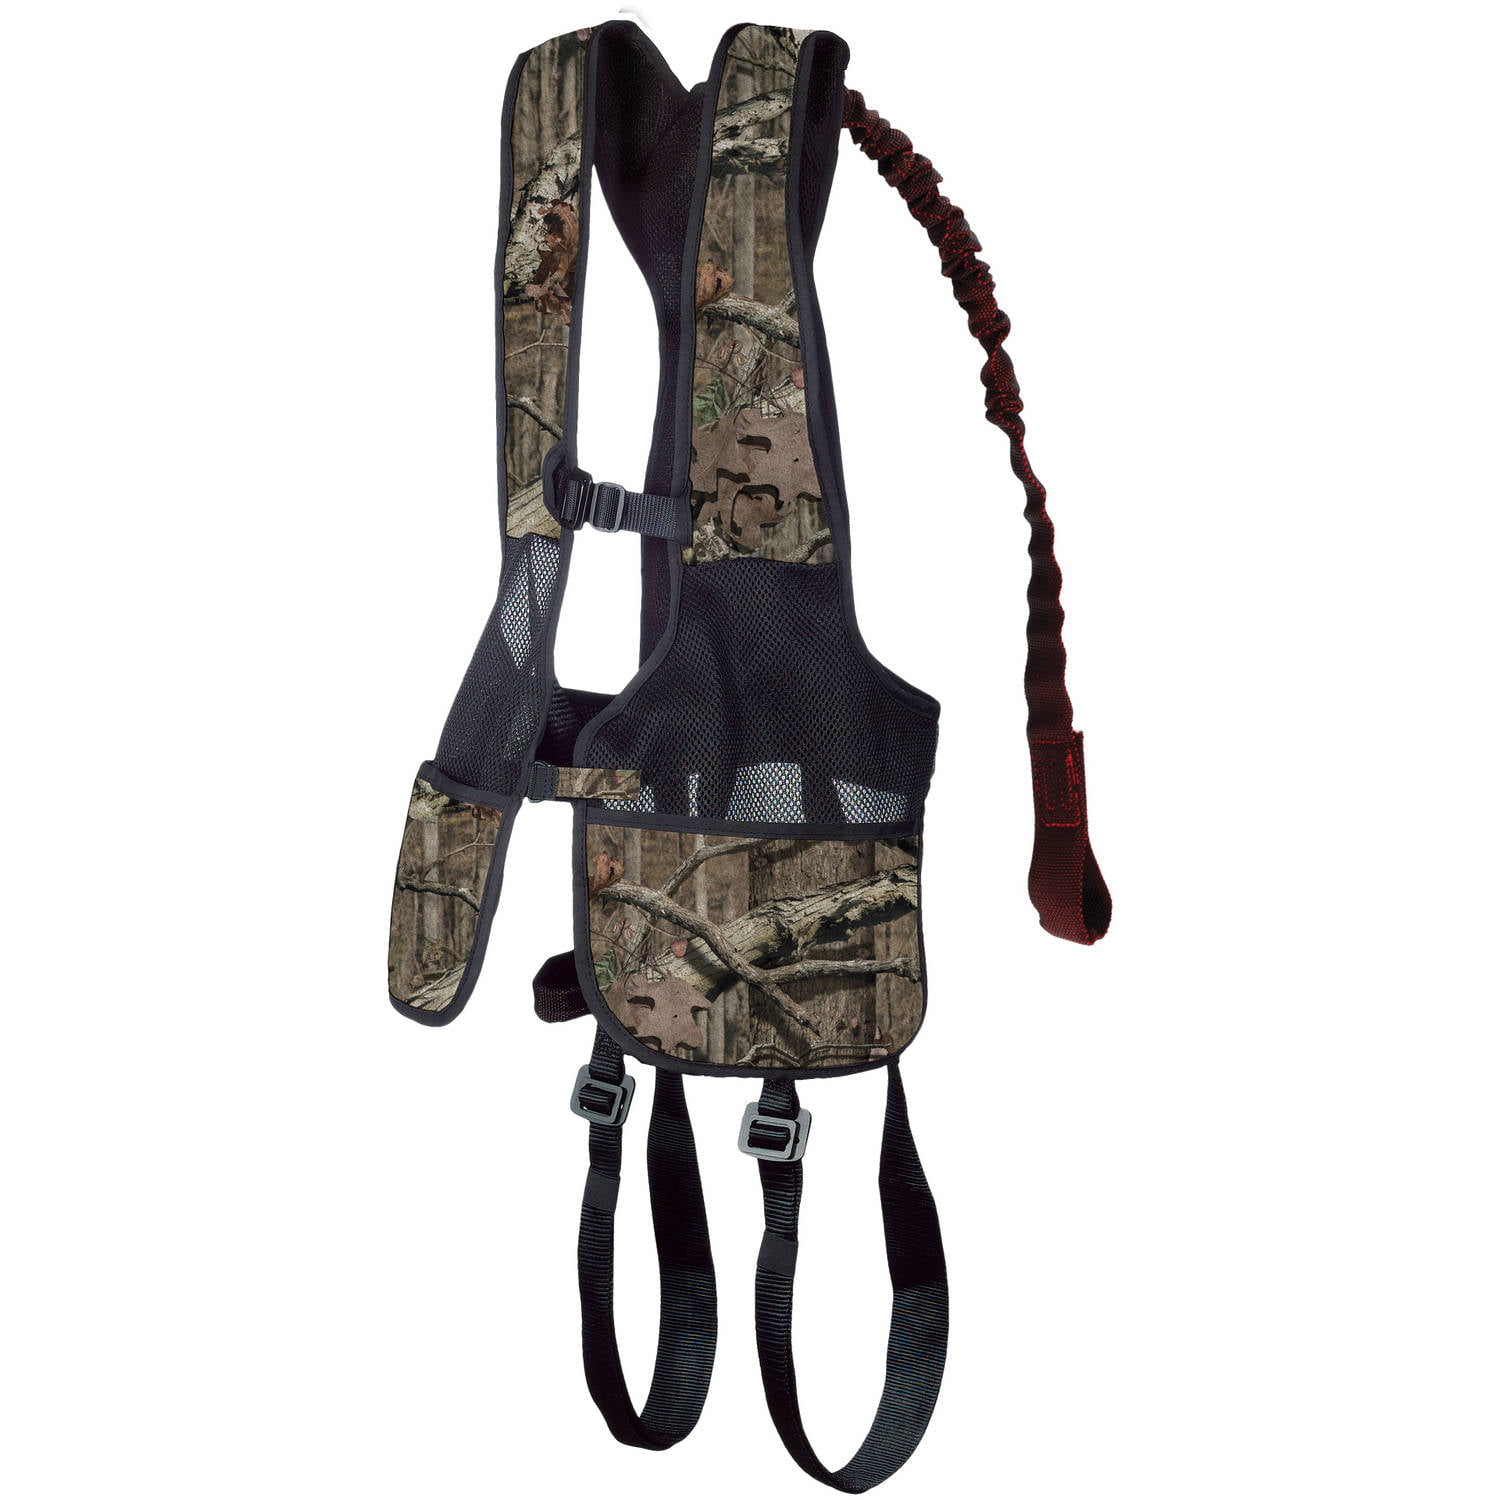 Safety Harness Universal Comfort Kit Gorilla Treestands BRAND 49085 for sale online 